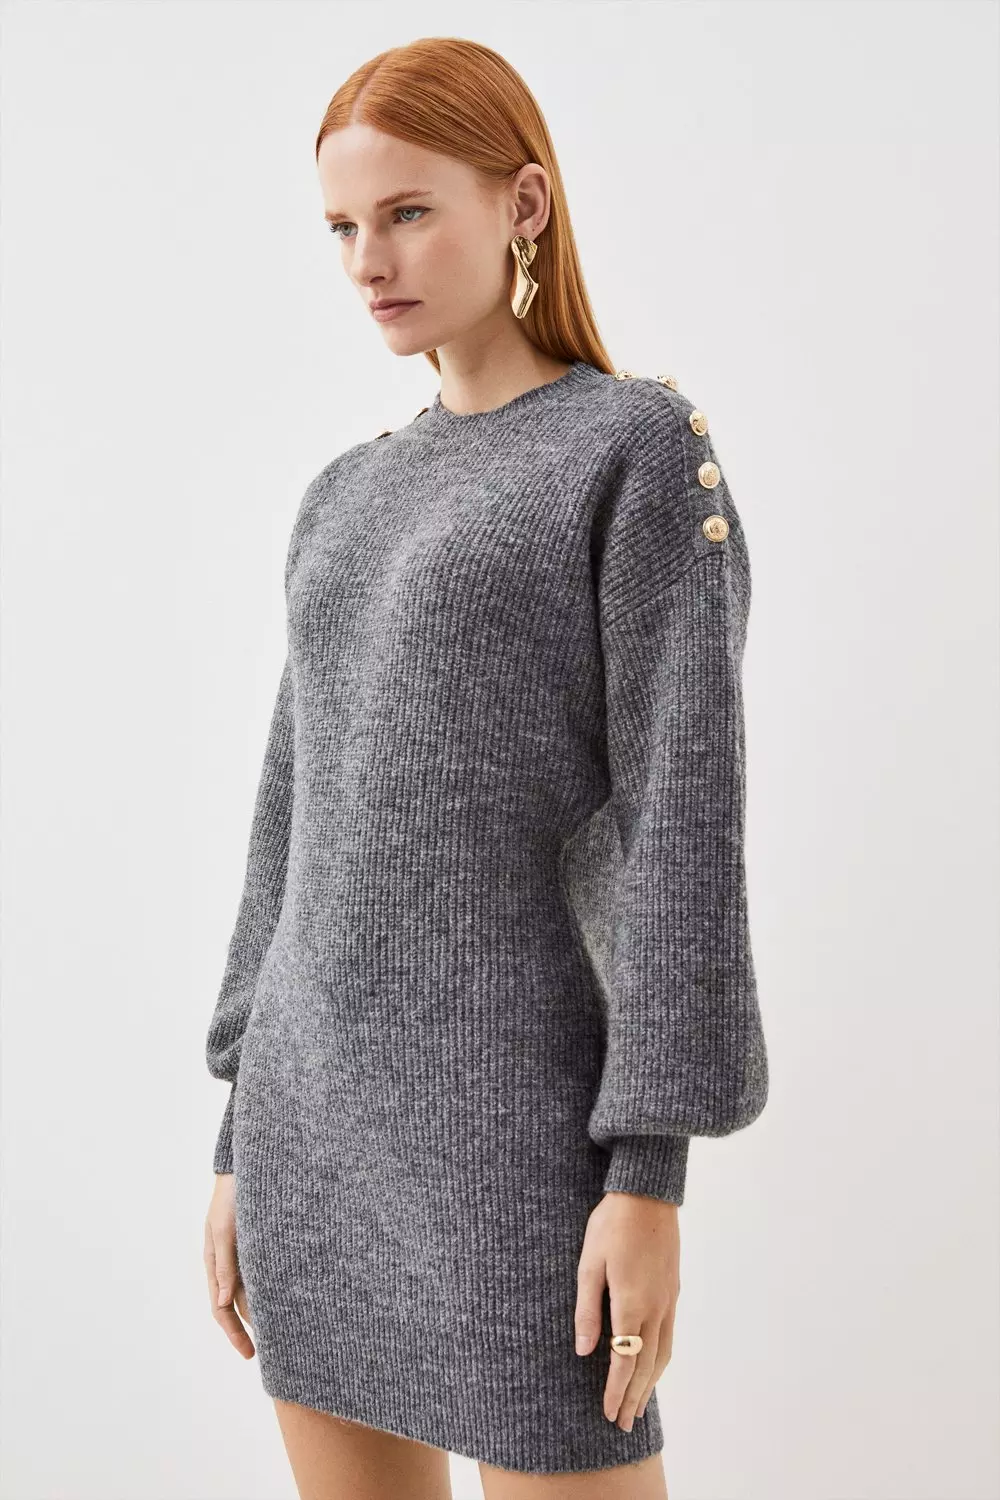 andmary Karen knit set mini dress-